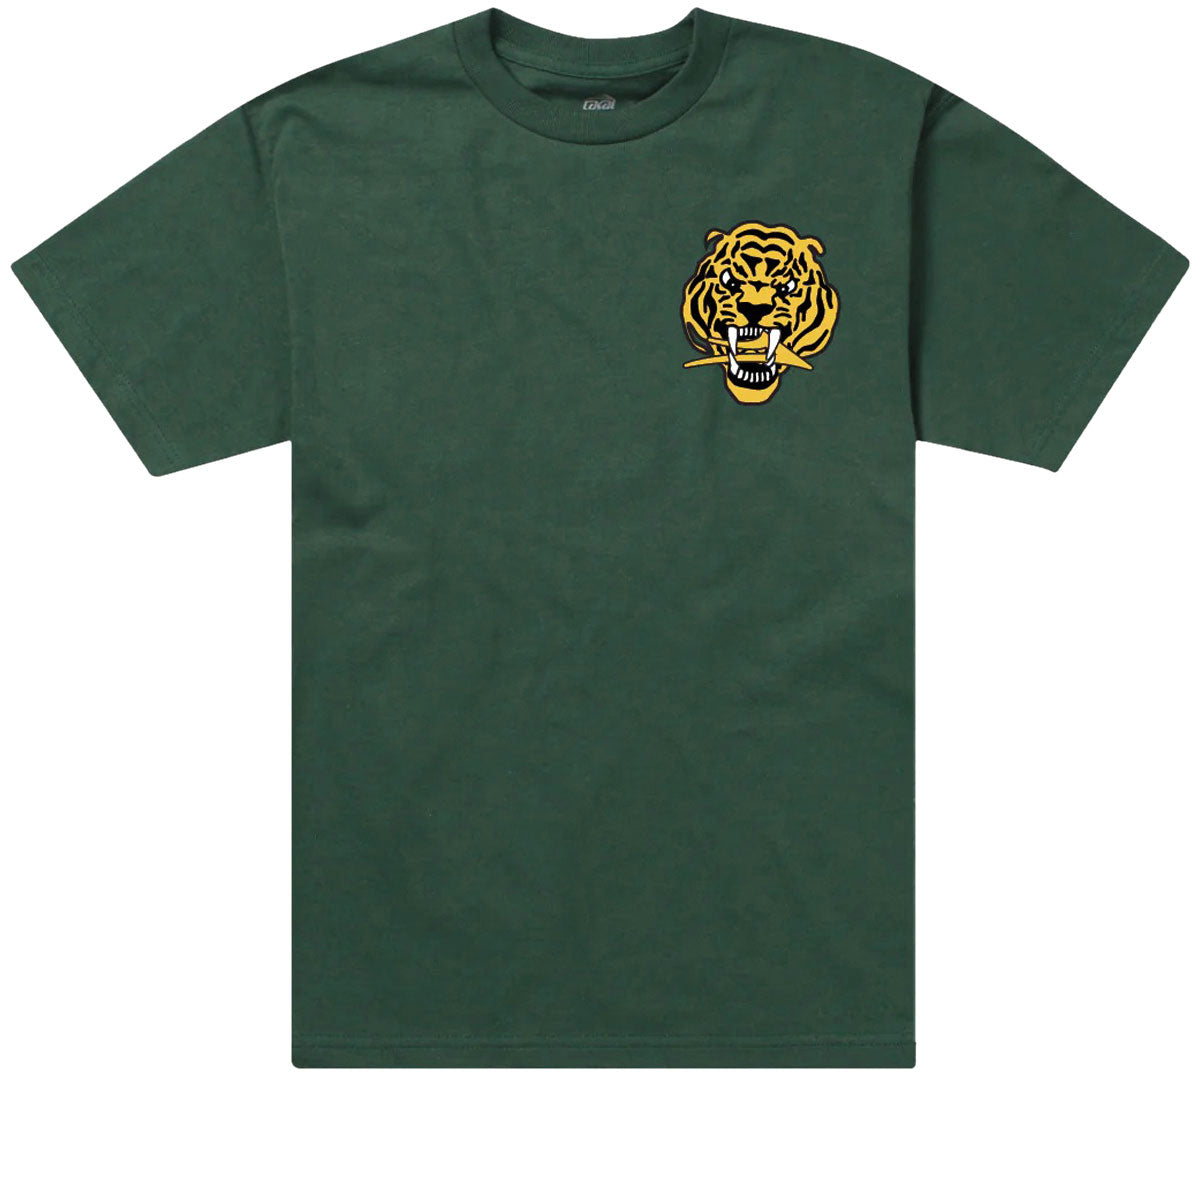 Lakai Bengal T-Shirt - Forest Green image 1